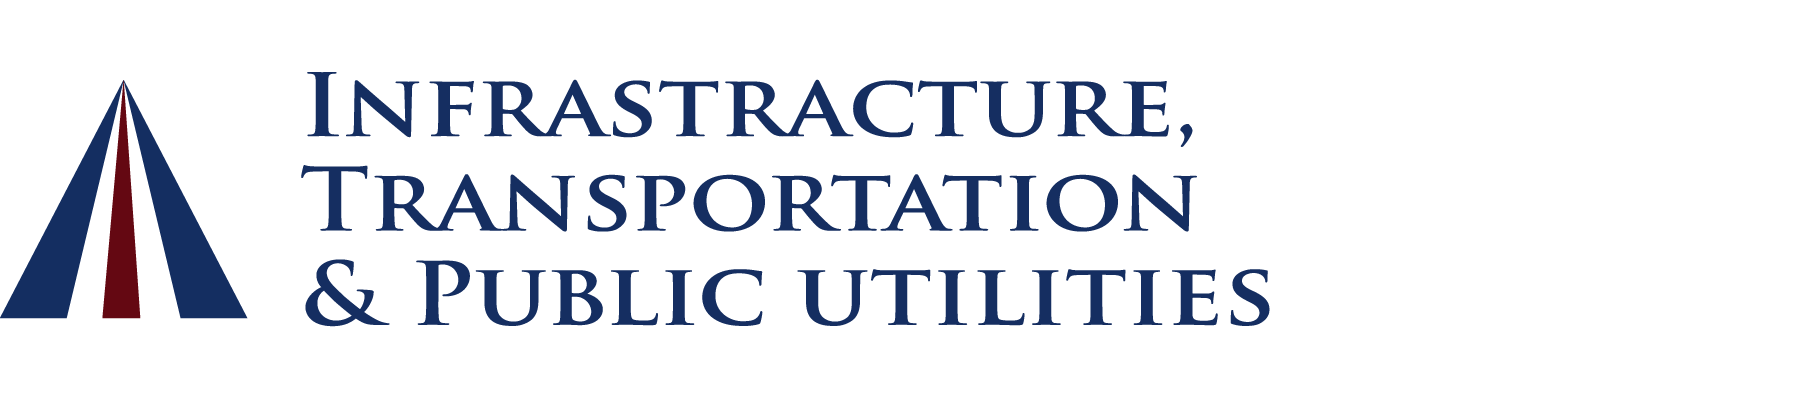 Practice Icon Text 12 Infrastructure Transportation Public Util min 1